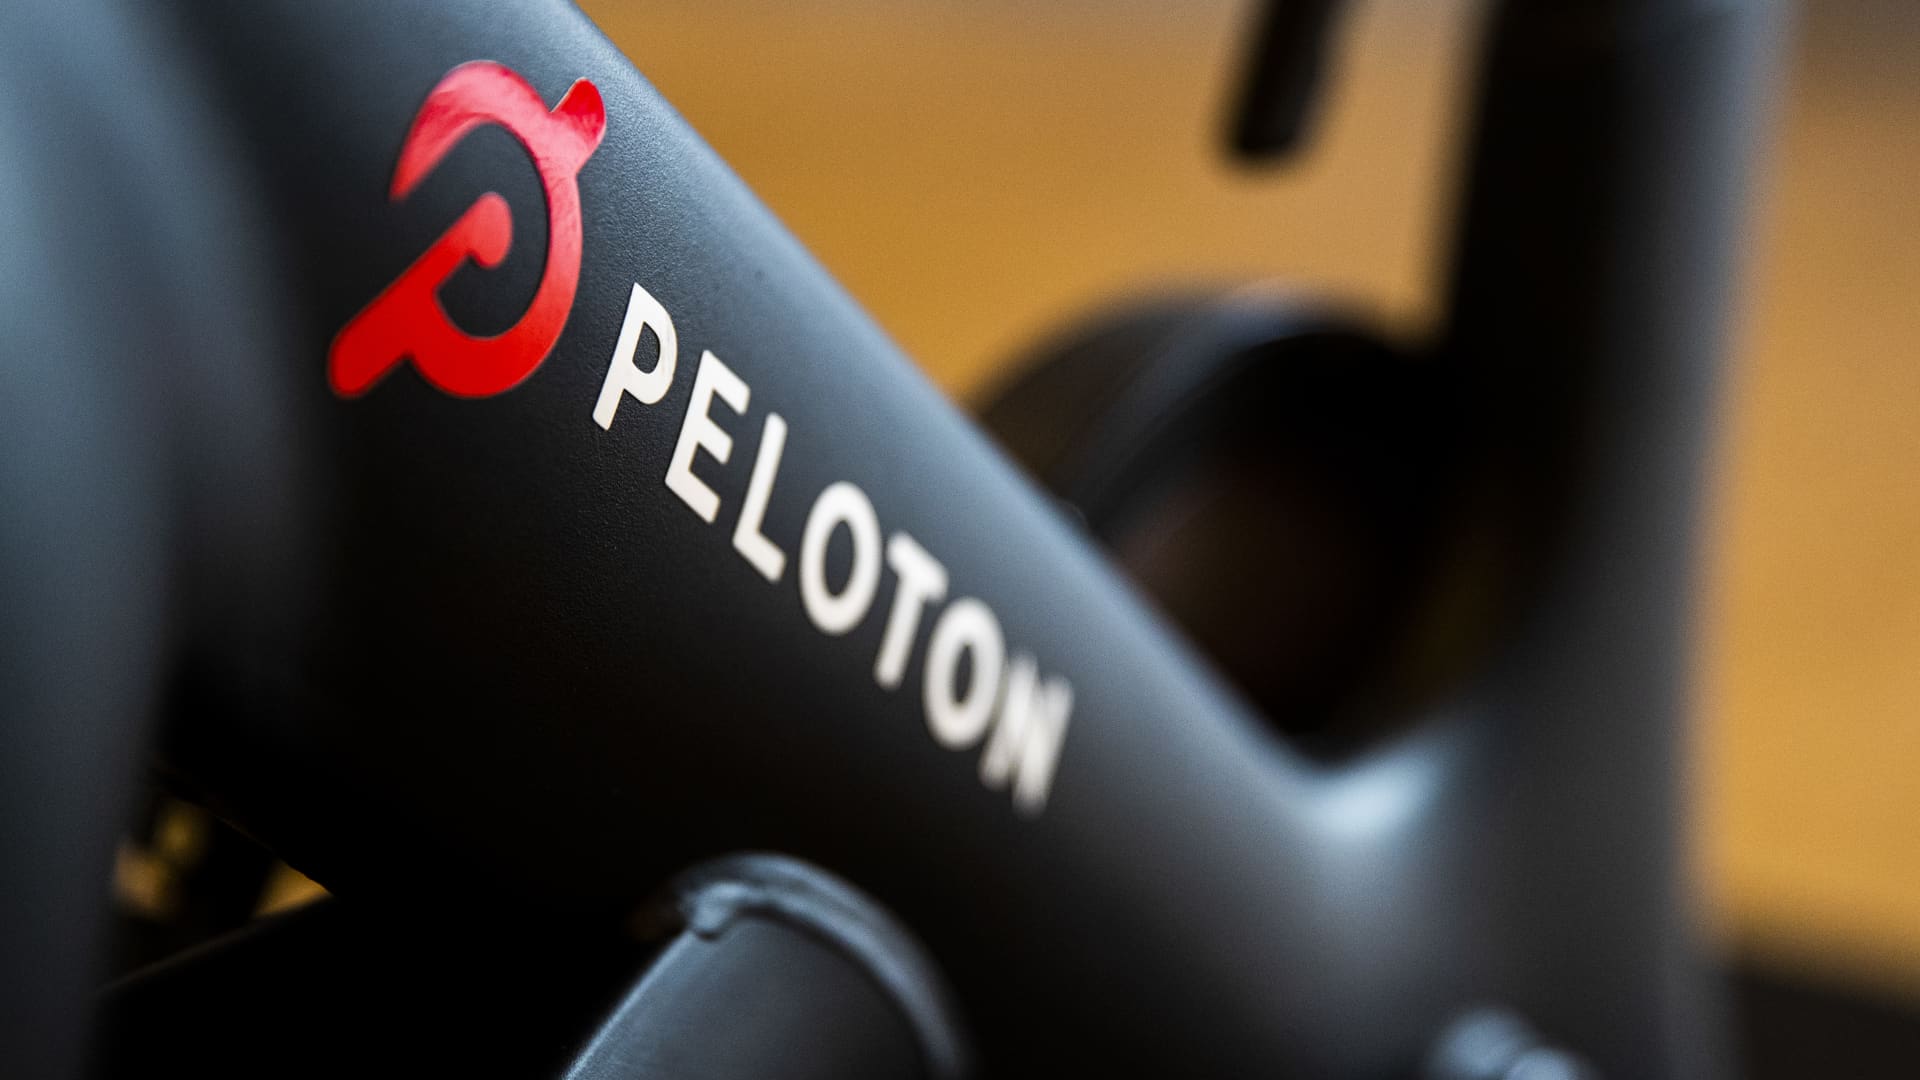 Peloton raises subscription fees, cuts prices for Bikes, Treads